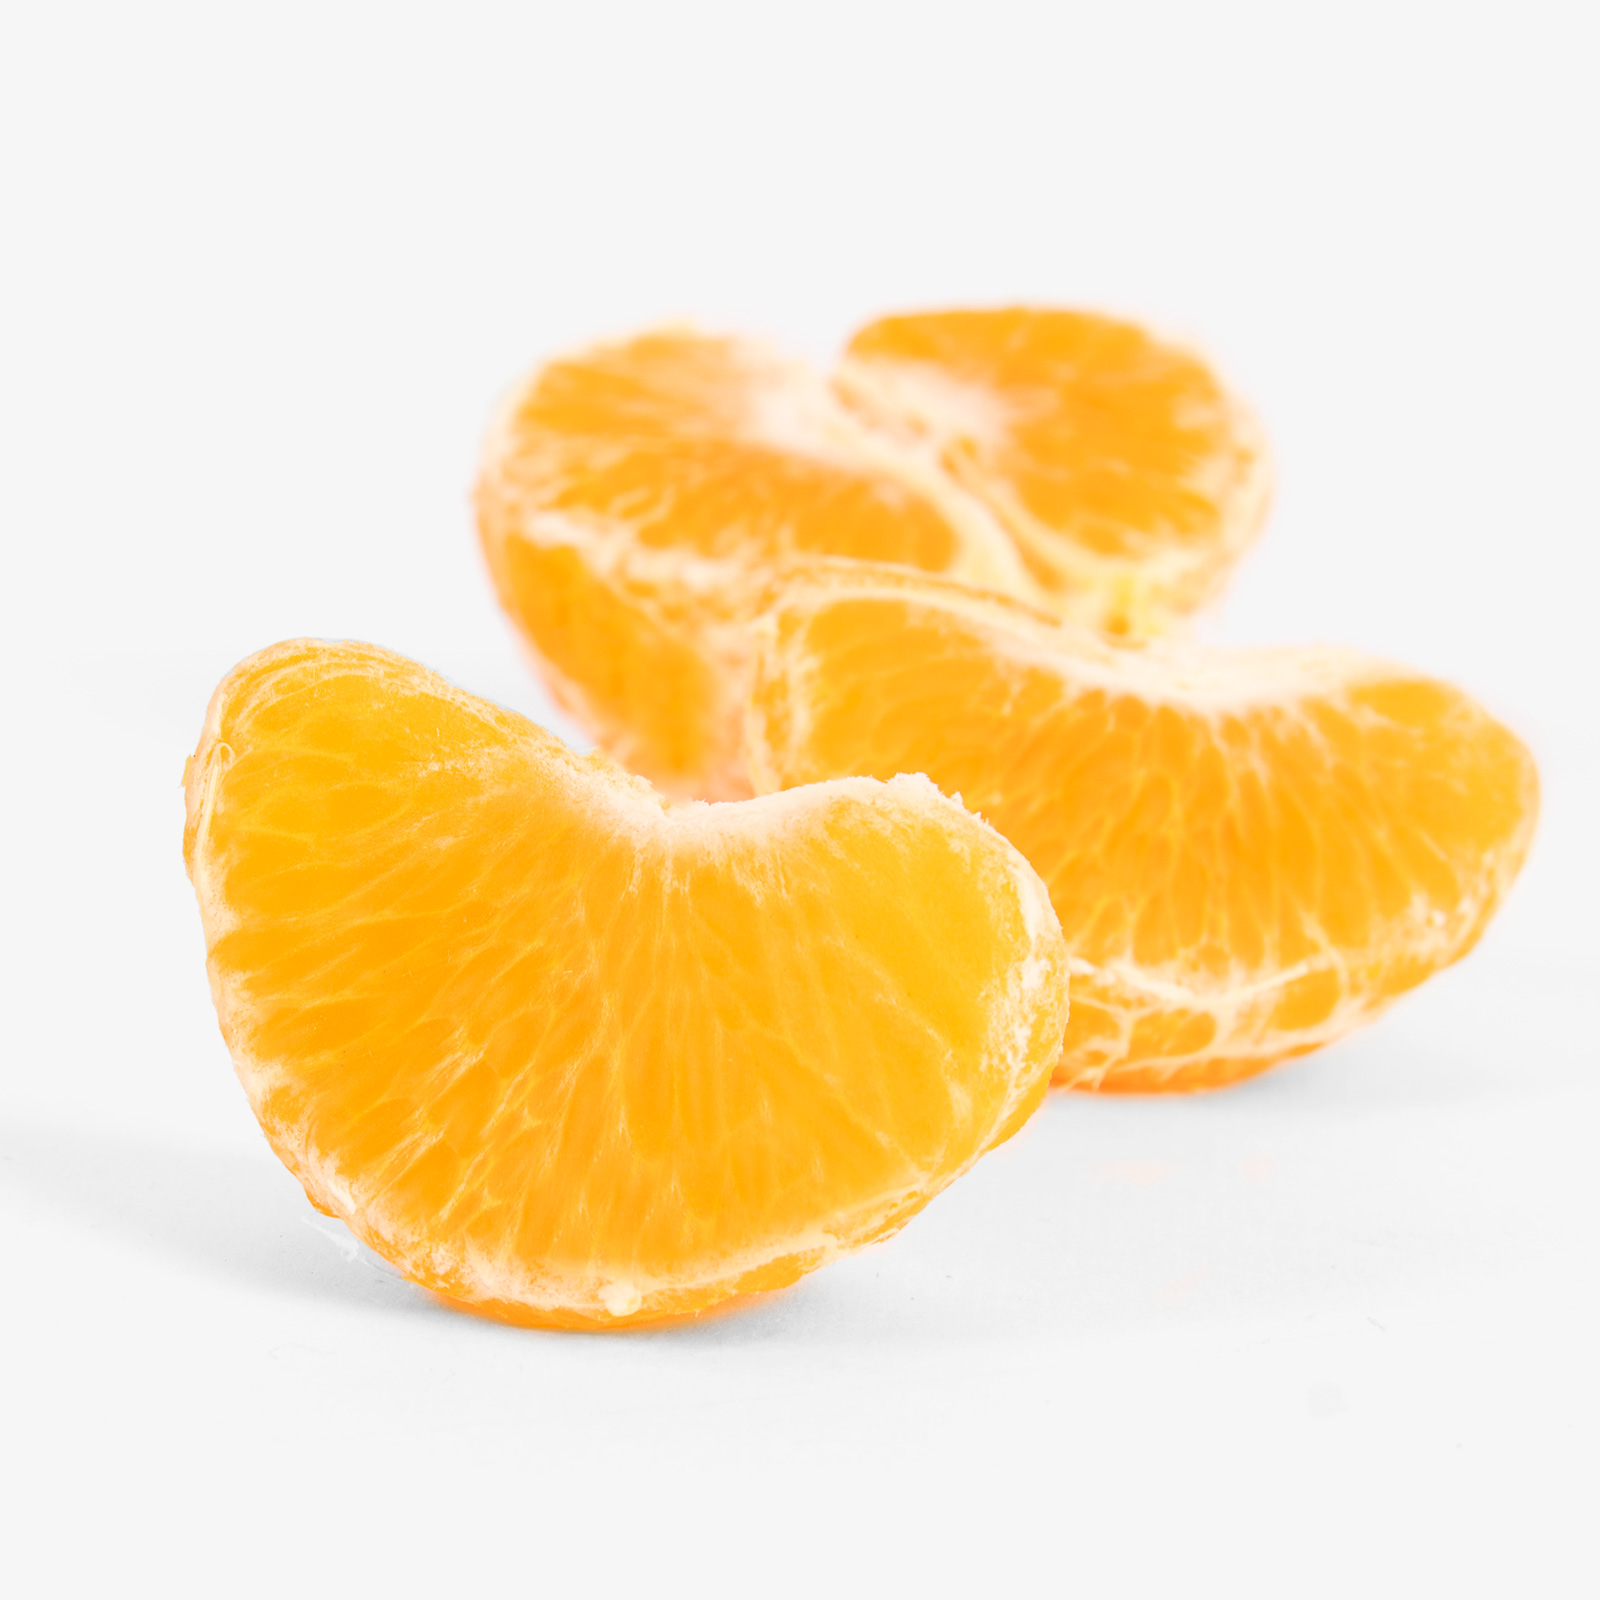 Comprar mandarinas orri online